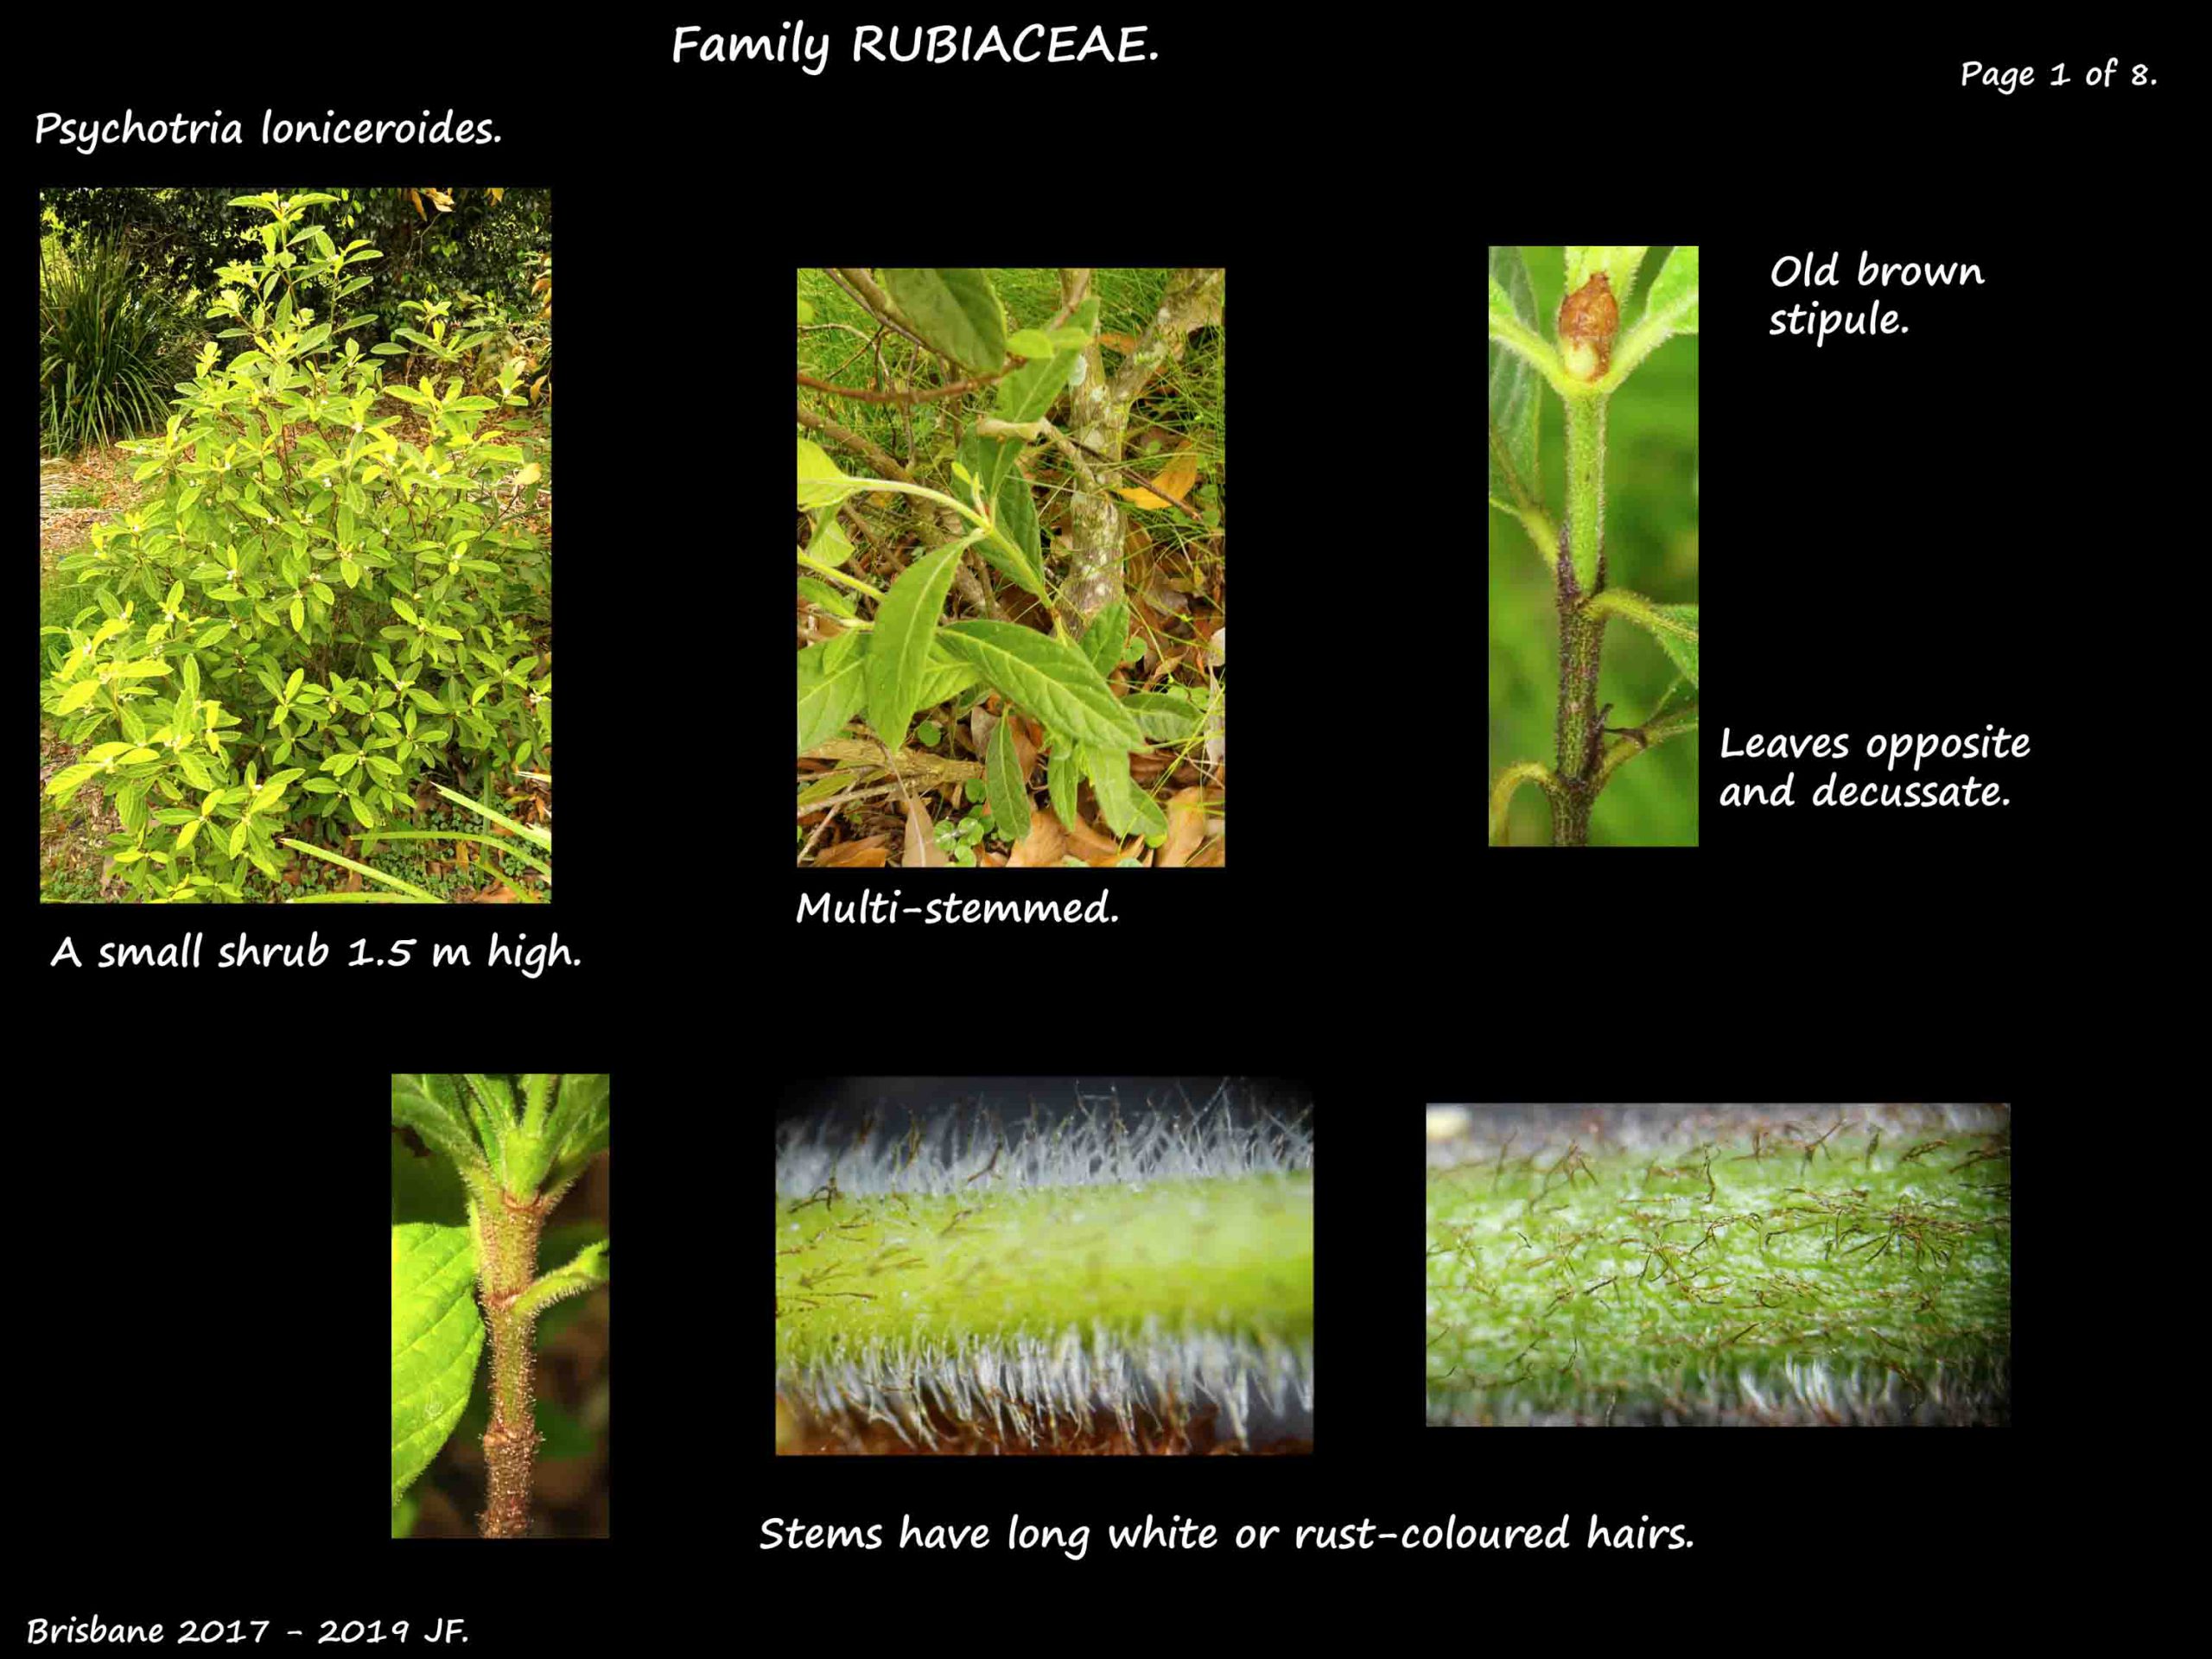 1 A Hairy Psychotria shrub